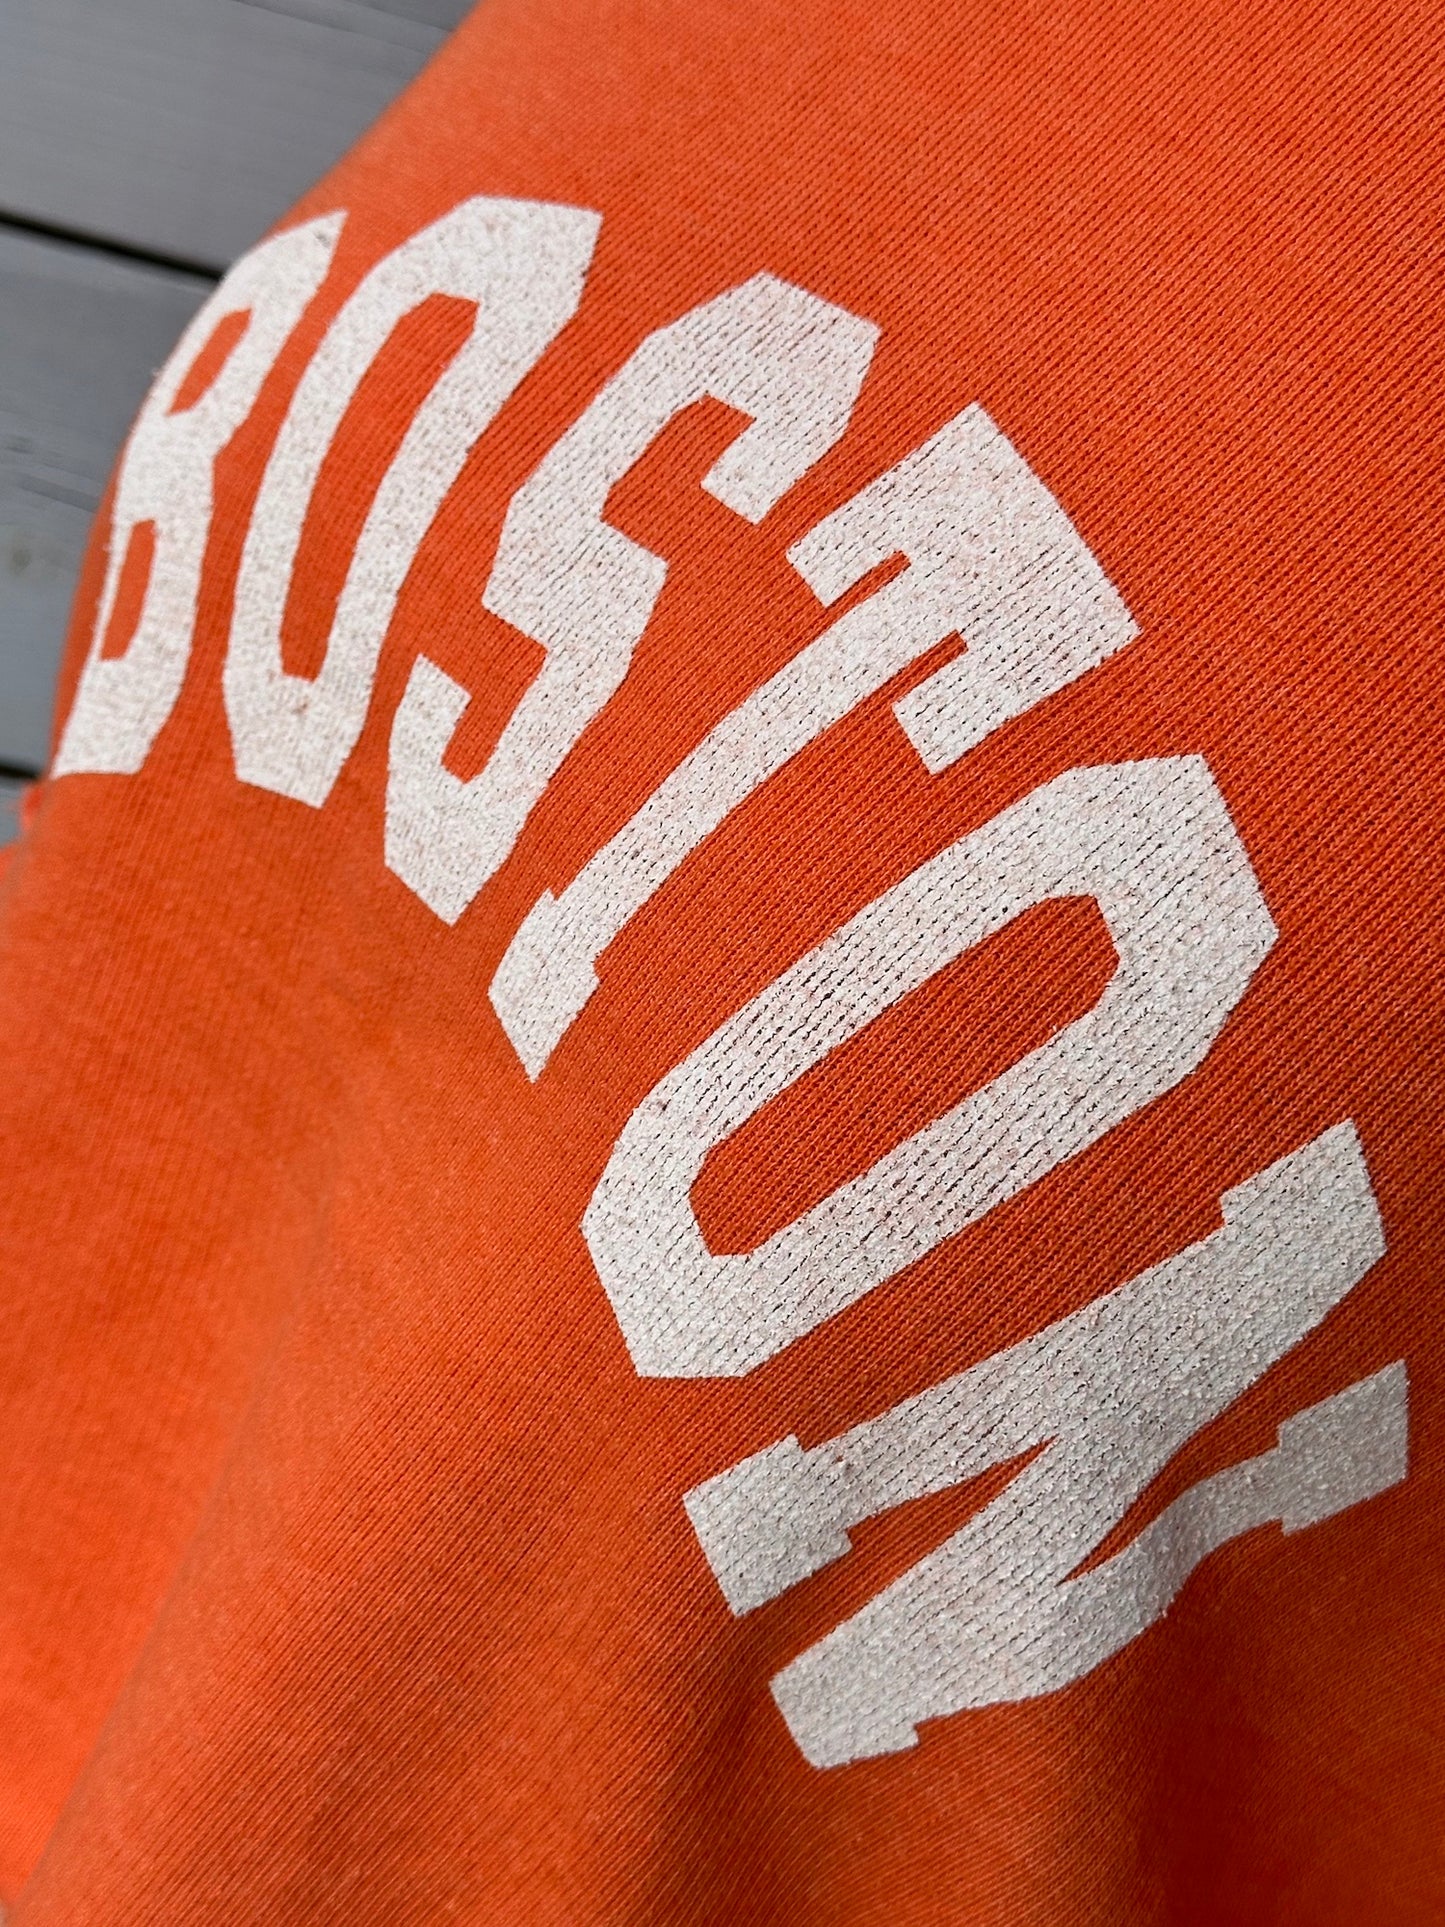 Cropped Sweater "BOSTON" in Sunny Orange